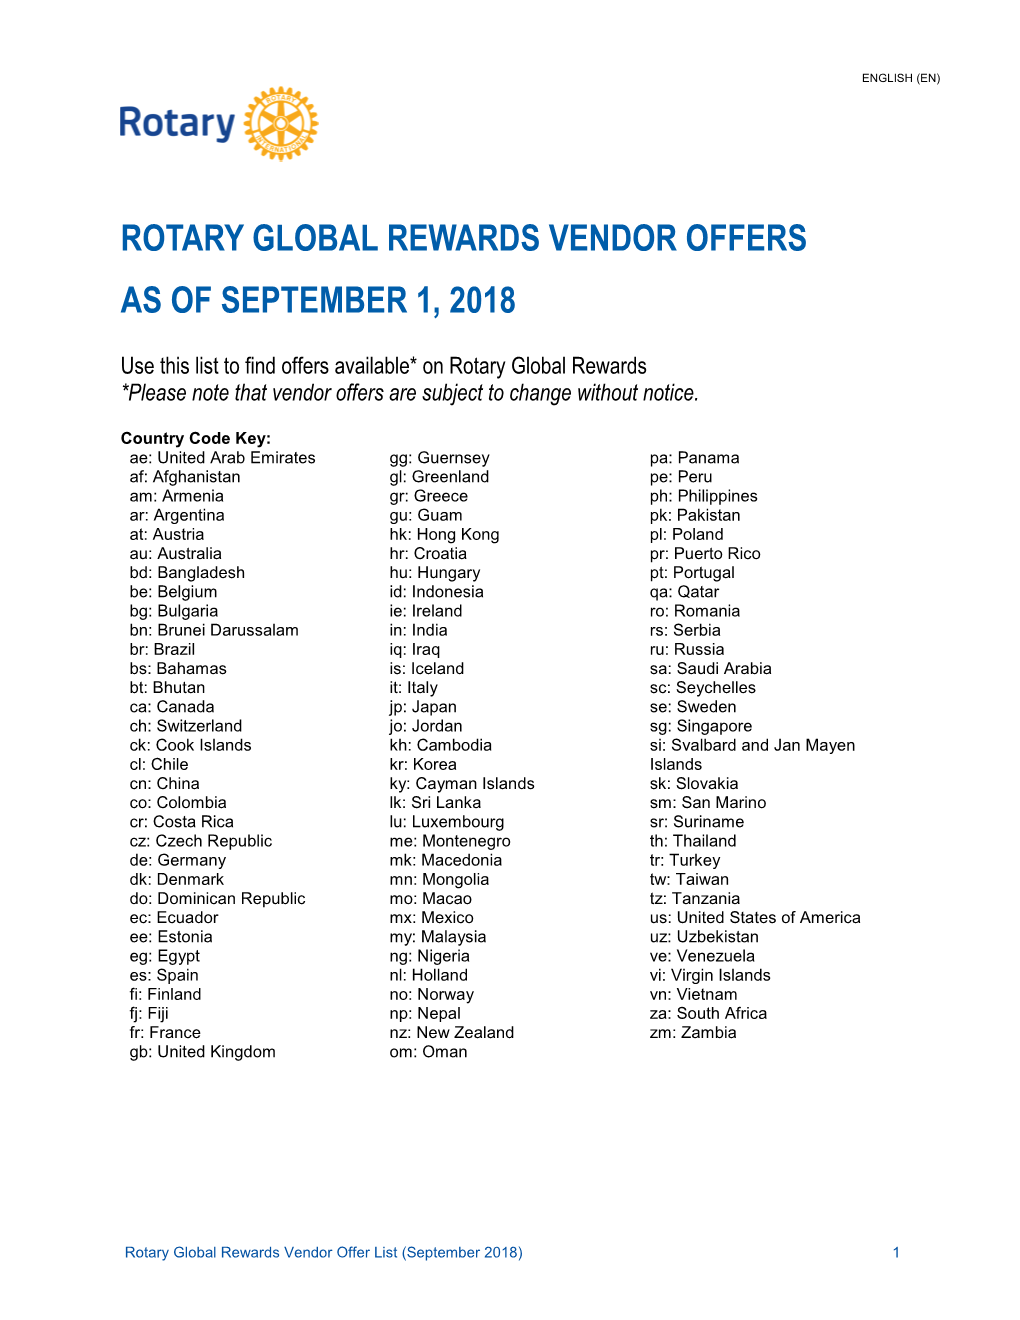 Rotary Global Rewards Vendor Offers As of September 1, 2018